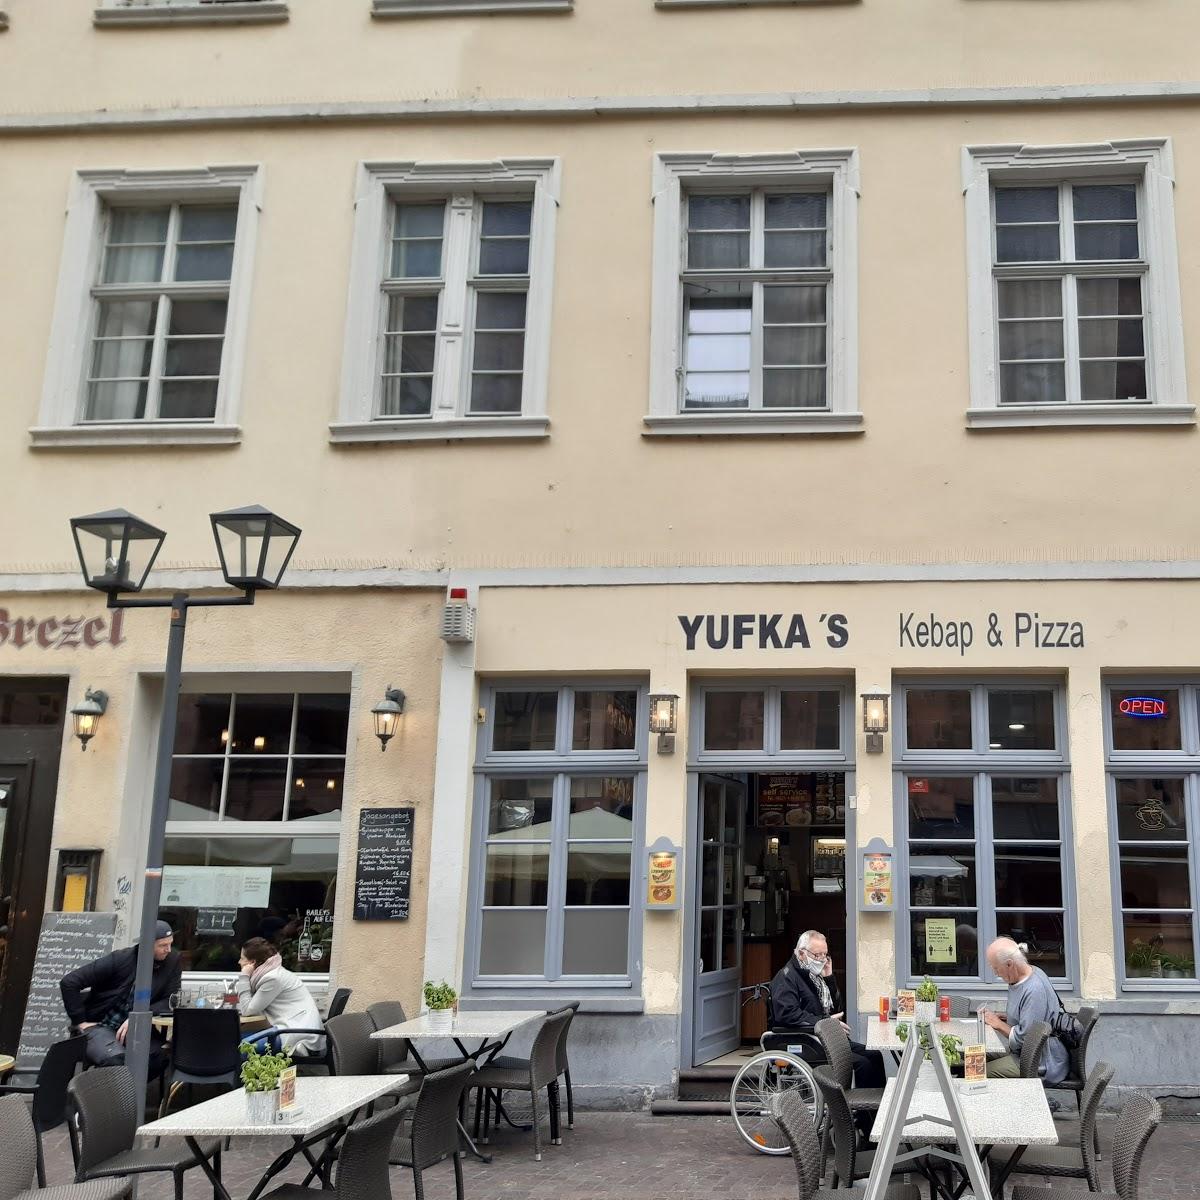 Restaurant "Yufkas Kebap" in Heidelberg